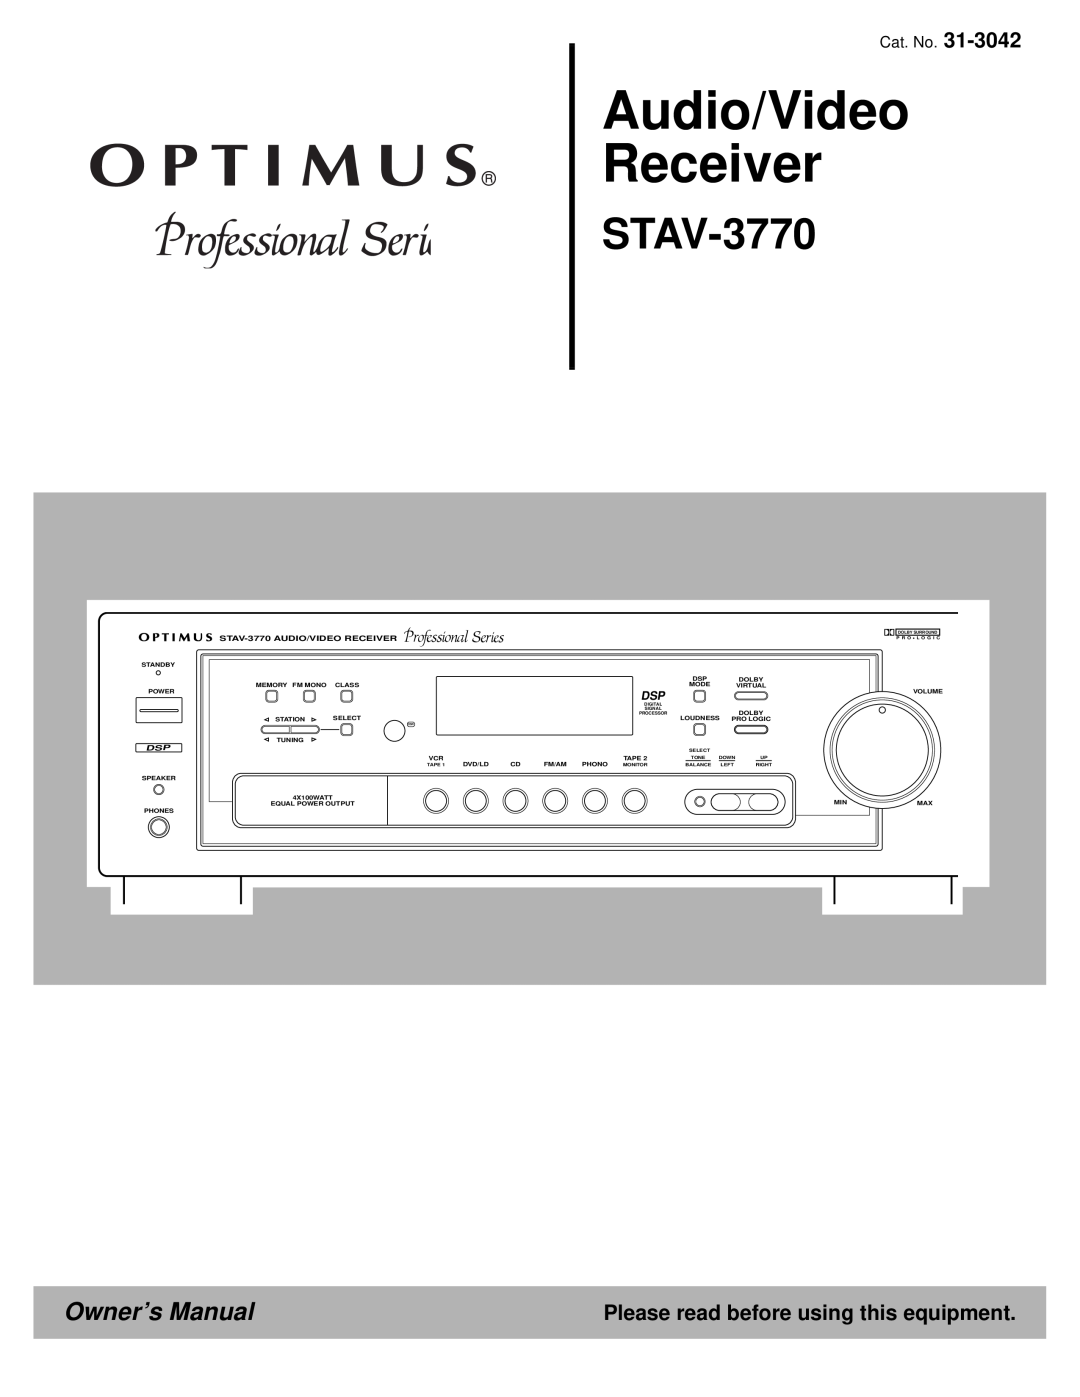 Optimus 31-3042 owner manual Audio/Video Receiver, STAV-3770, Please read before using this equipment 